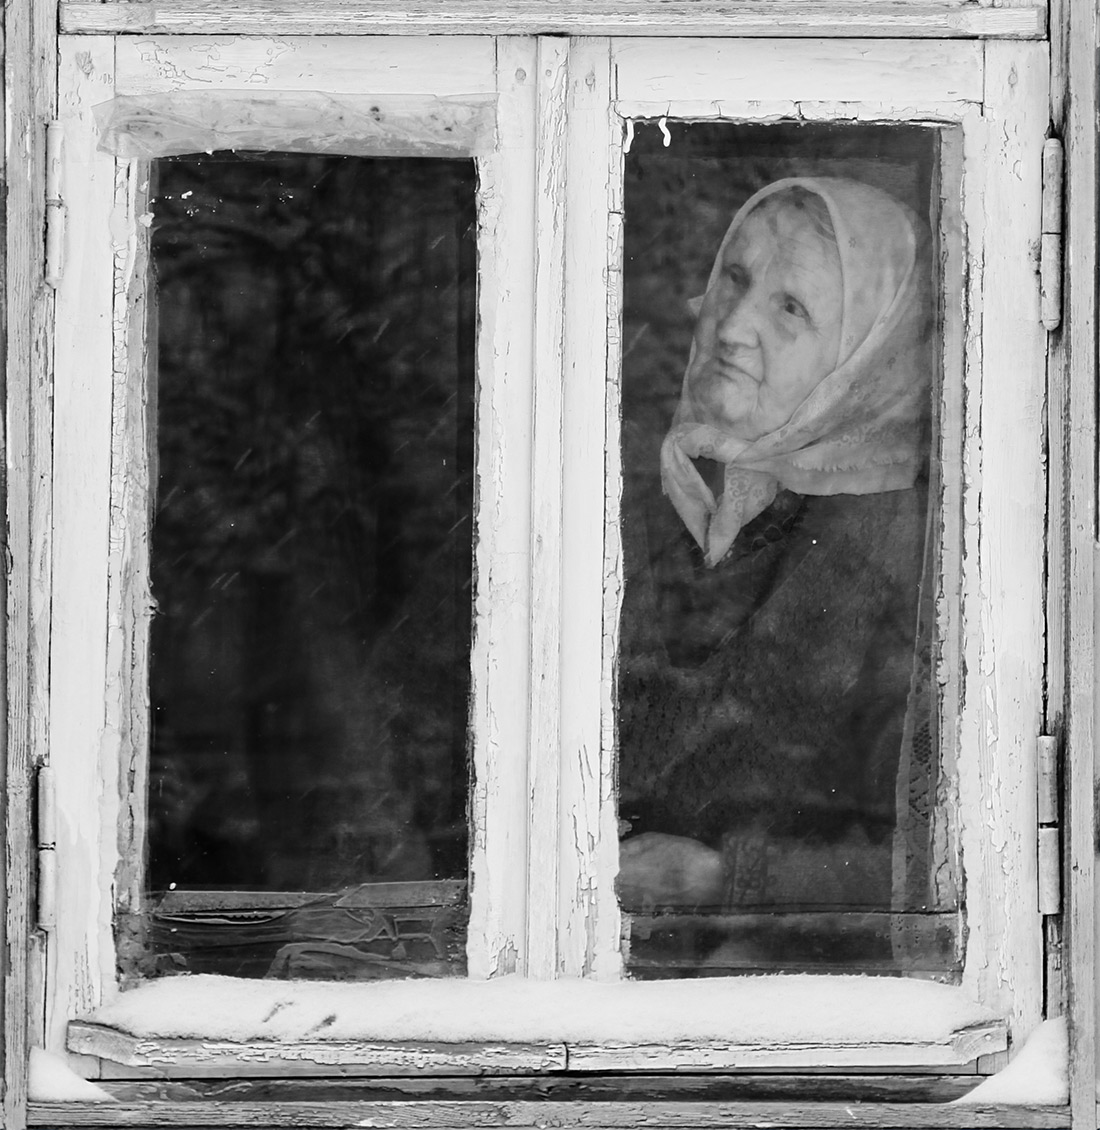 Глянула матушка в окно а там все. Старушка у окна в деревне. Бабушка у окна. Старая женщина у окна. Силуэт бабушки в окне.